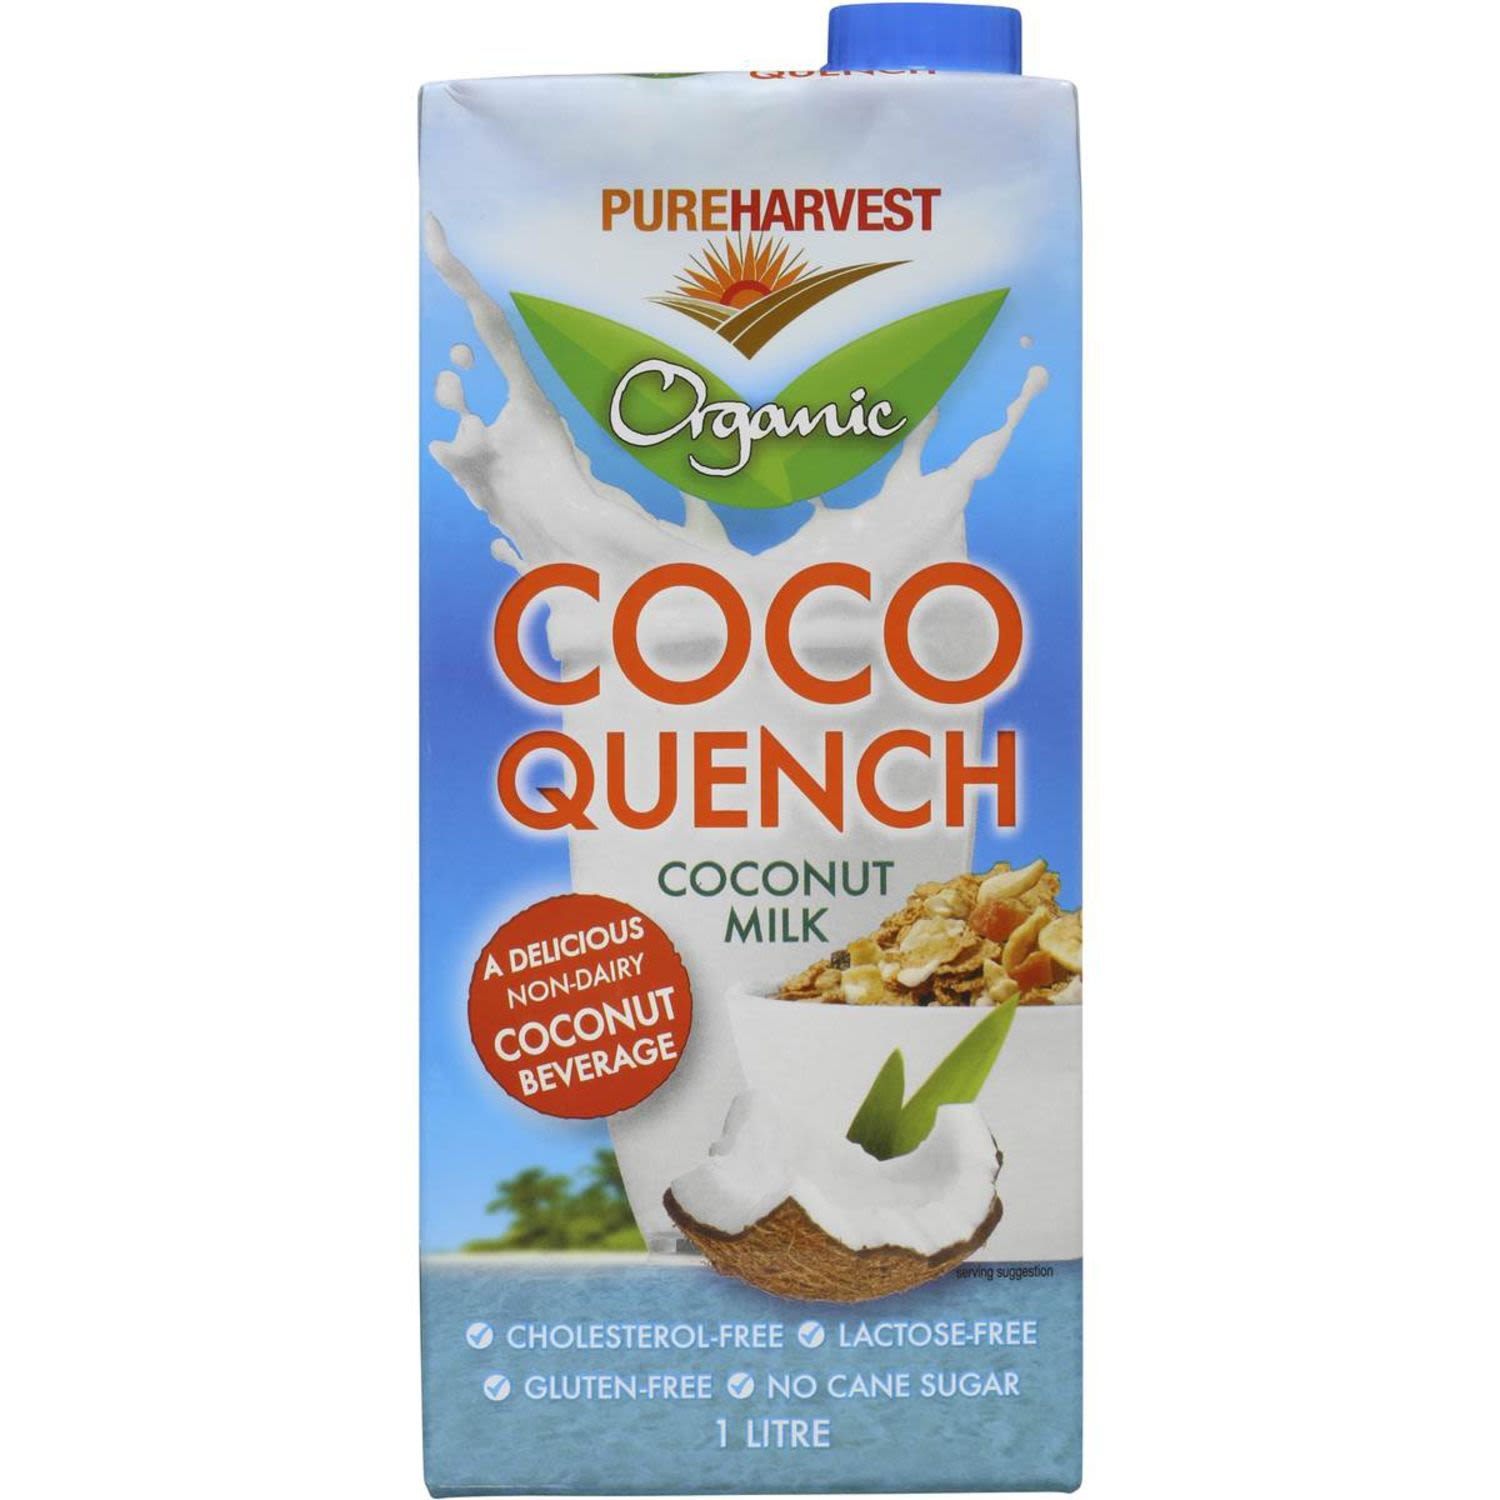 Pureharvest Coco Quench Coconut Milk, 1 Litre